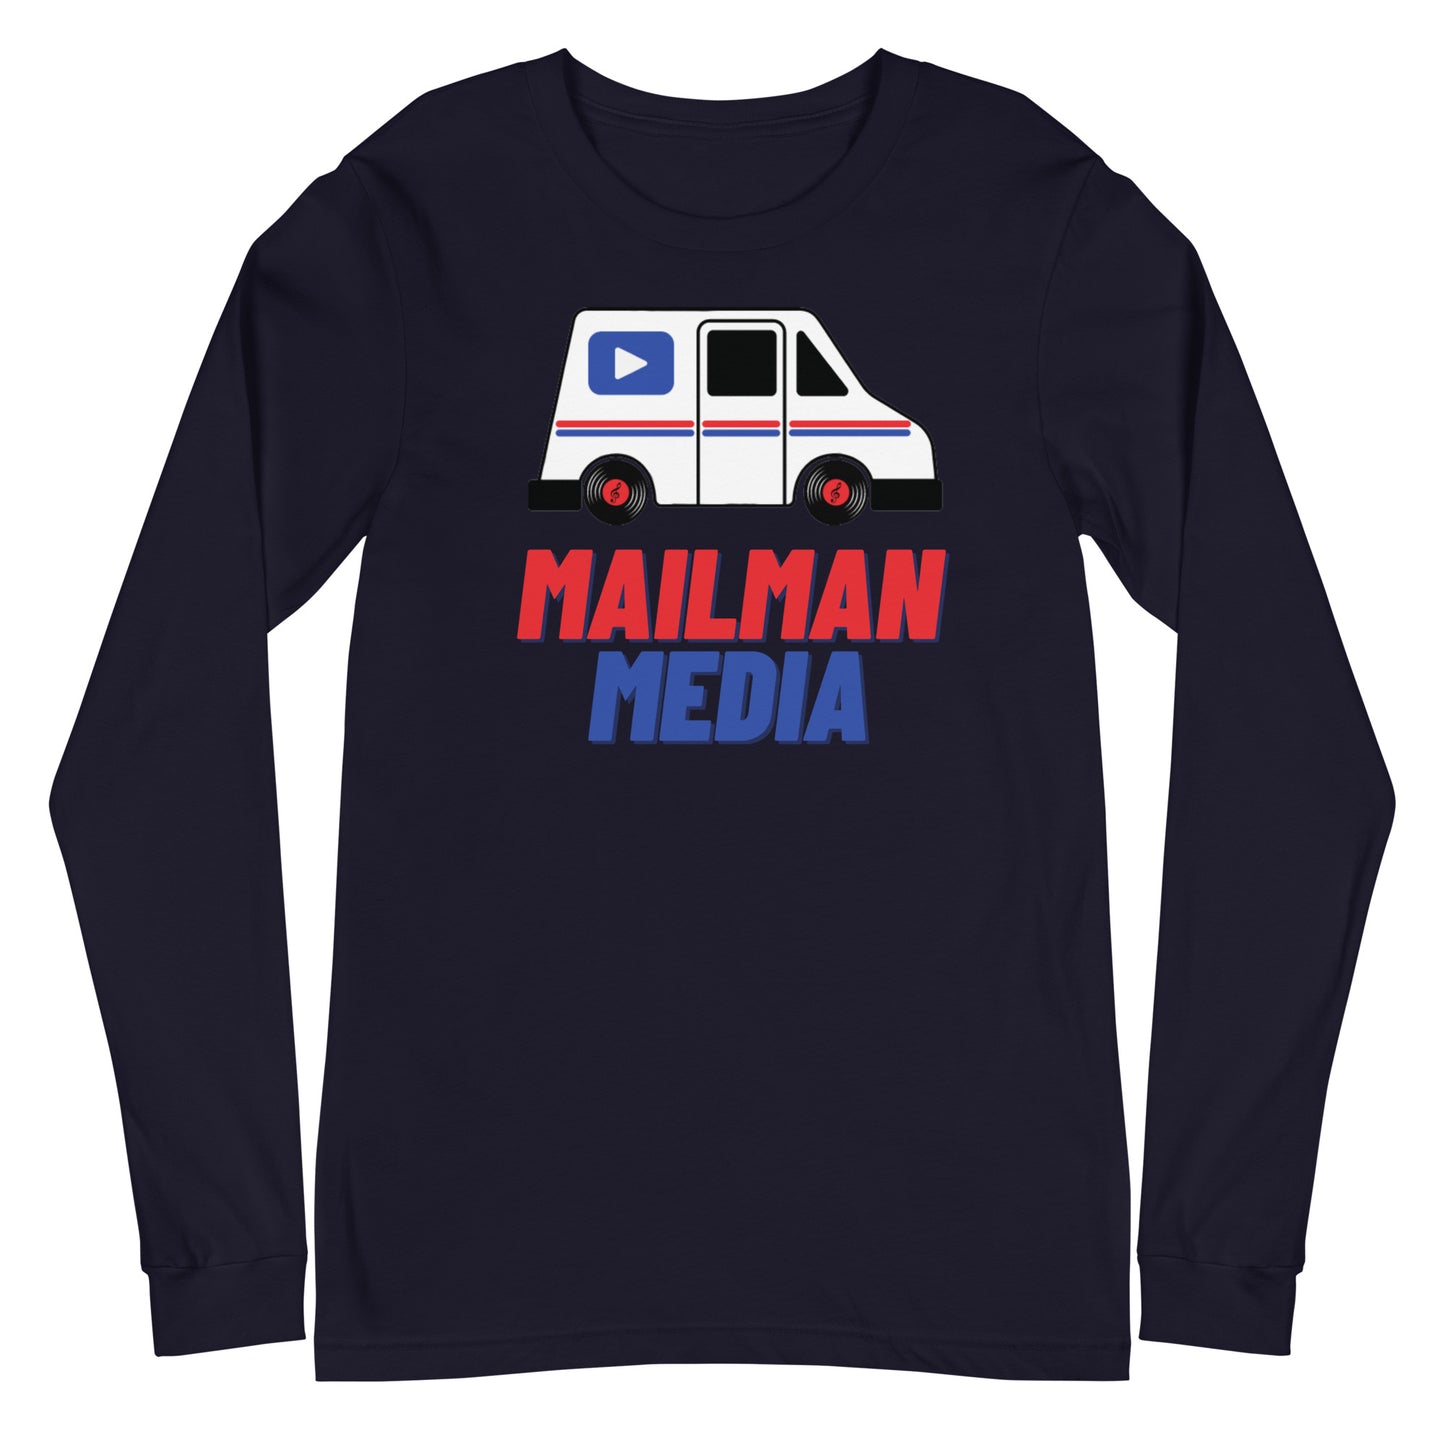 Mailman Media long sleeve tee